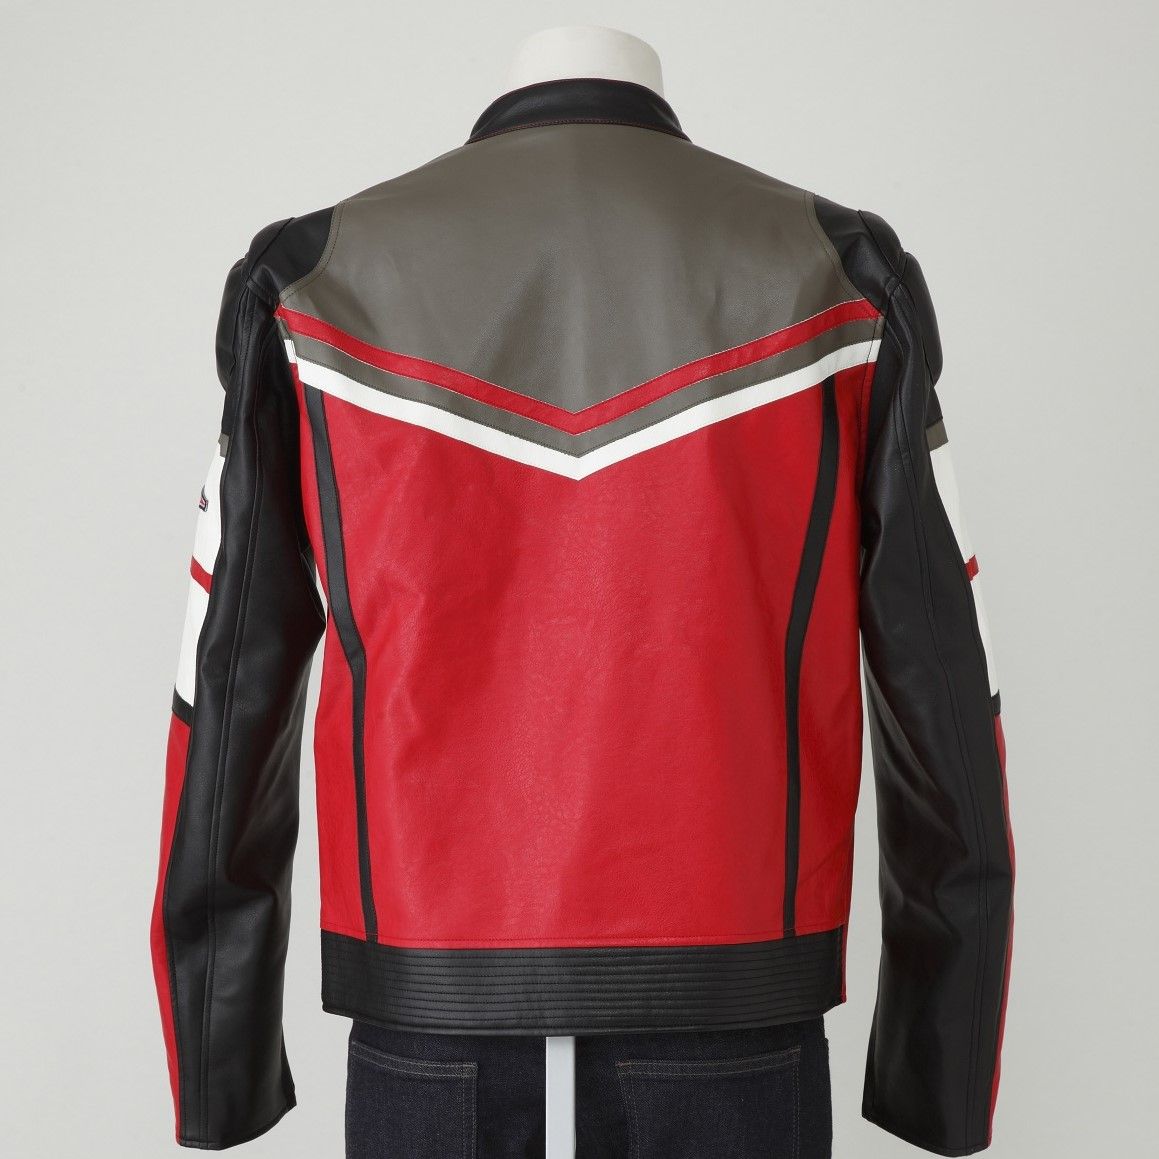 Ultraman Dyna Super GUTS Uniform Jacket